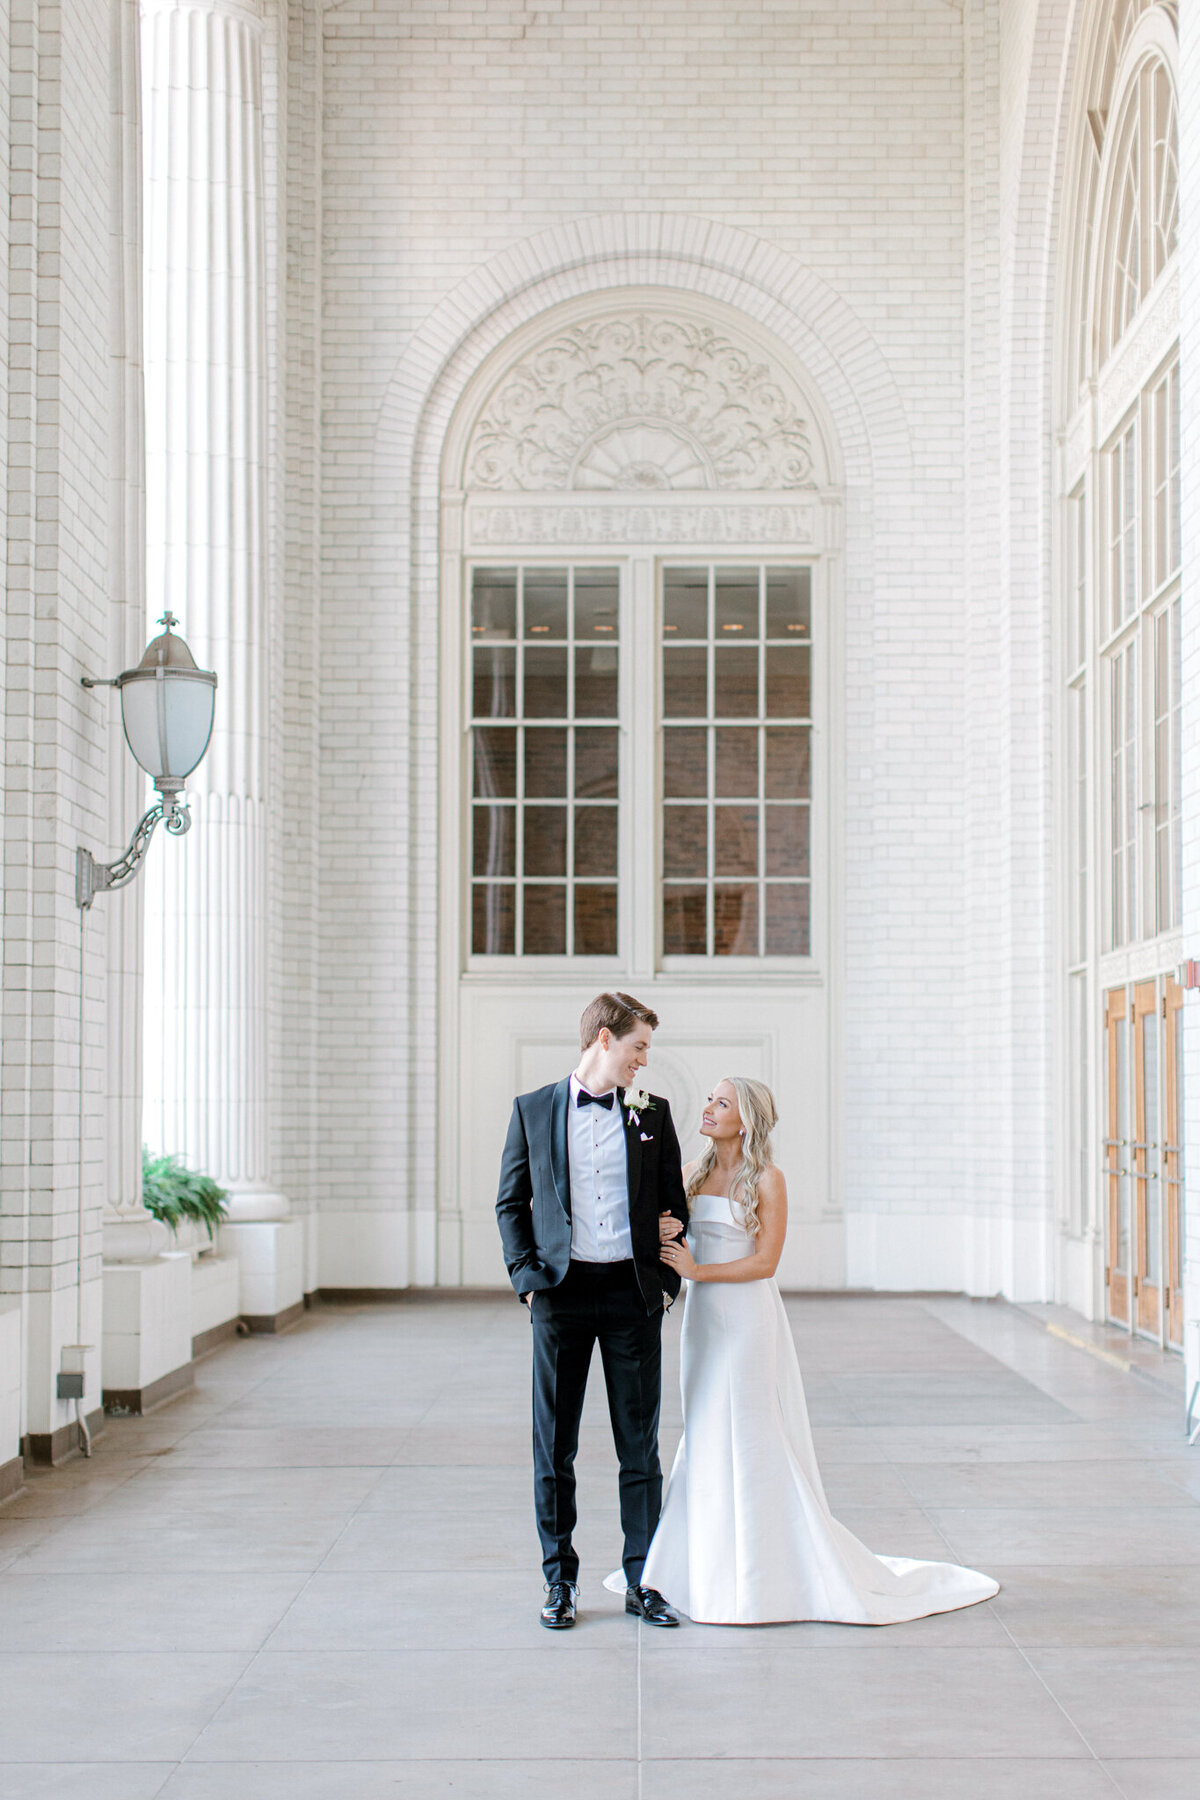 Madison & Michael's Wedding at Union Station | Dallas Wedding Photographer | Sami Kathryn Photography-106